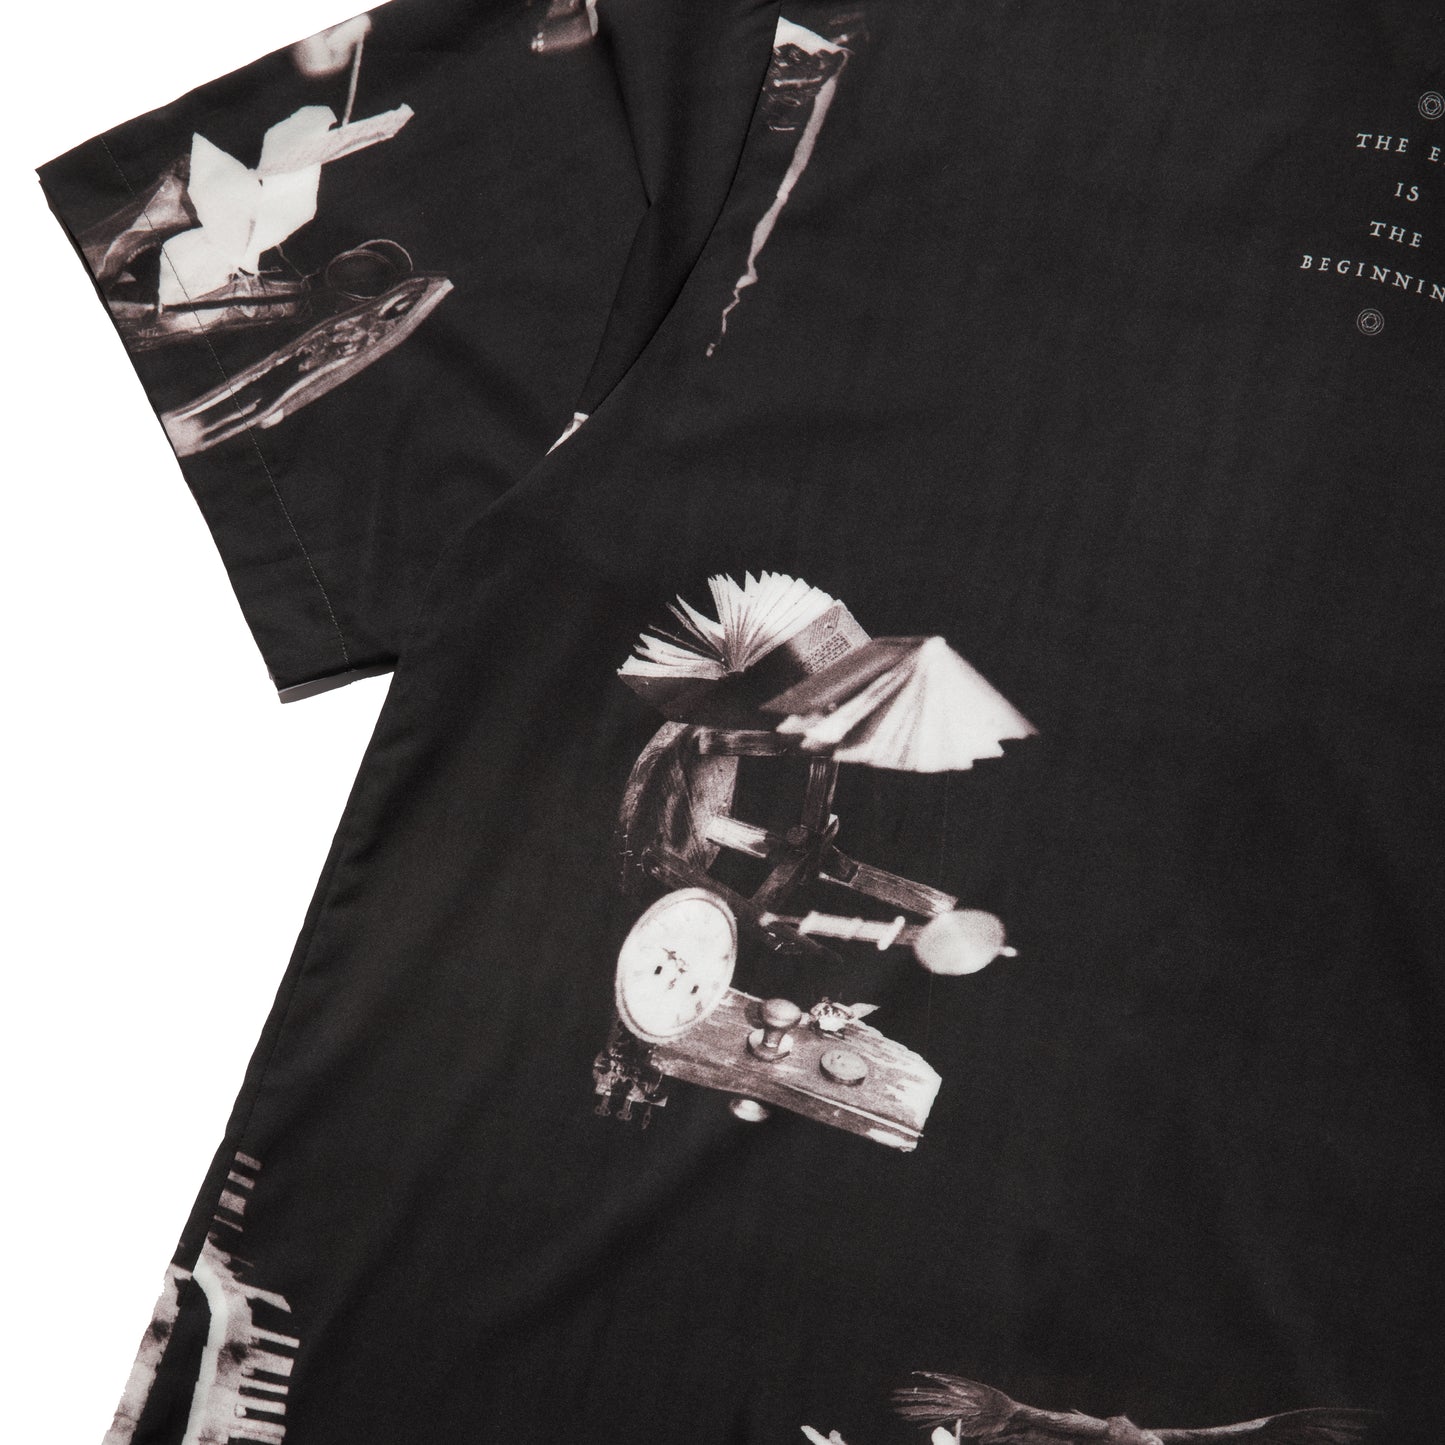 THE END Themed Overprint Shirt